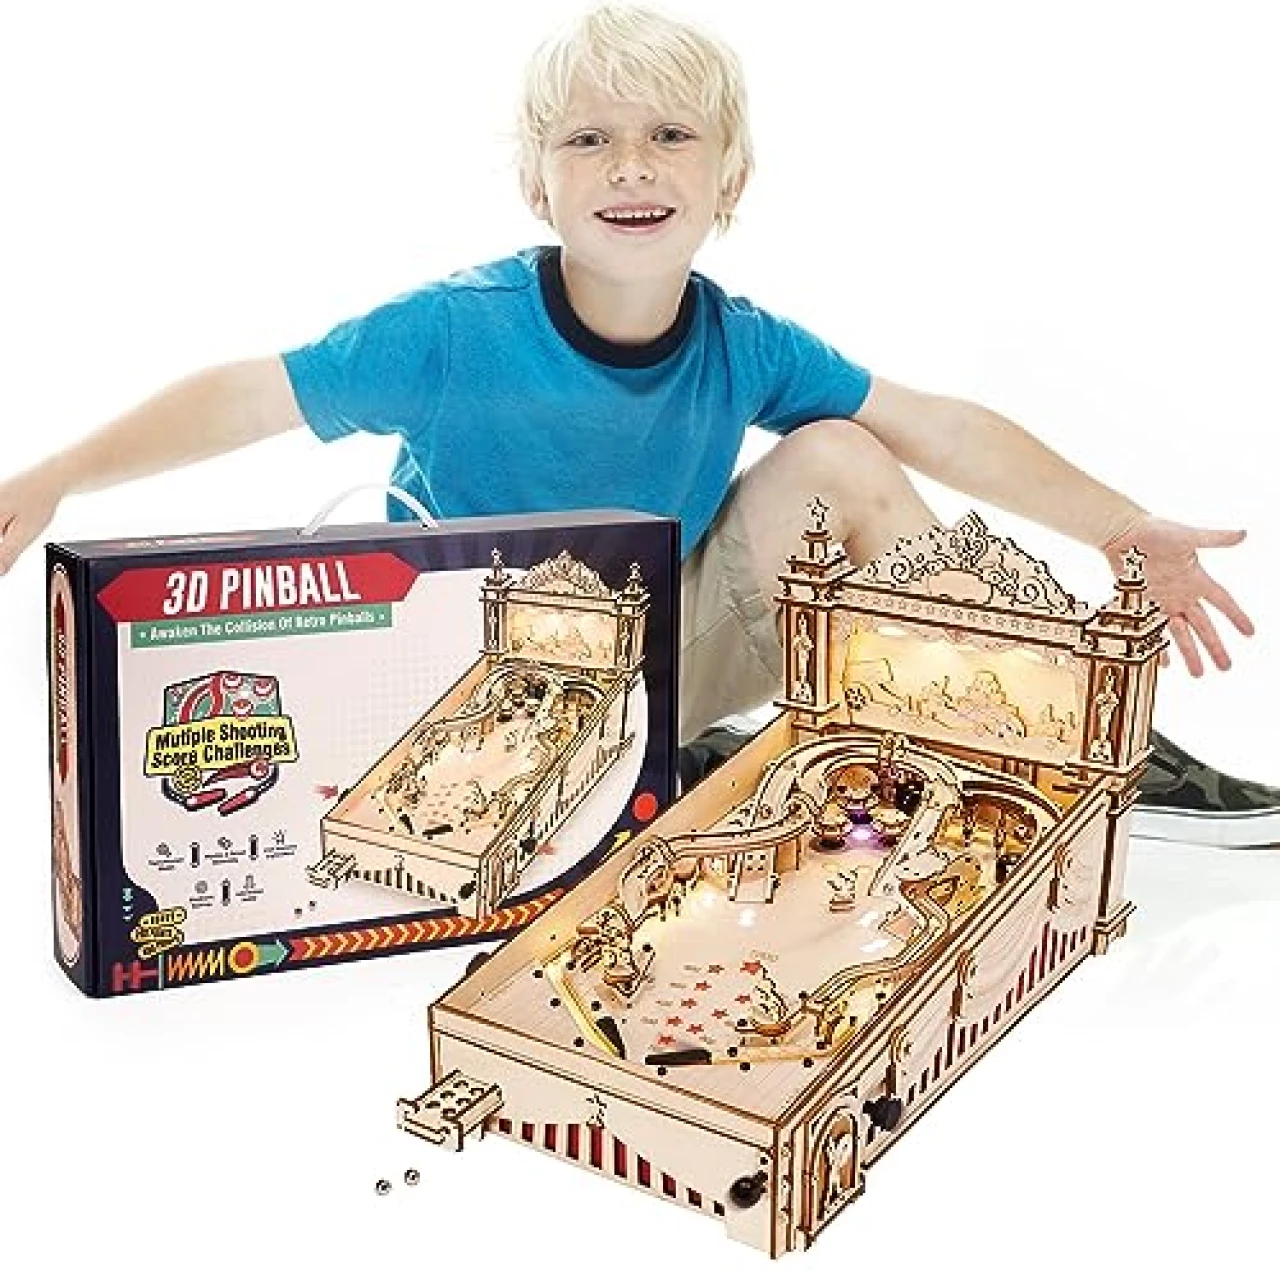 Unique Gift for Men/Dad/Teens, ROBOTIME 3D Puzzle Wooden Pinball Machine Model